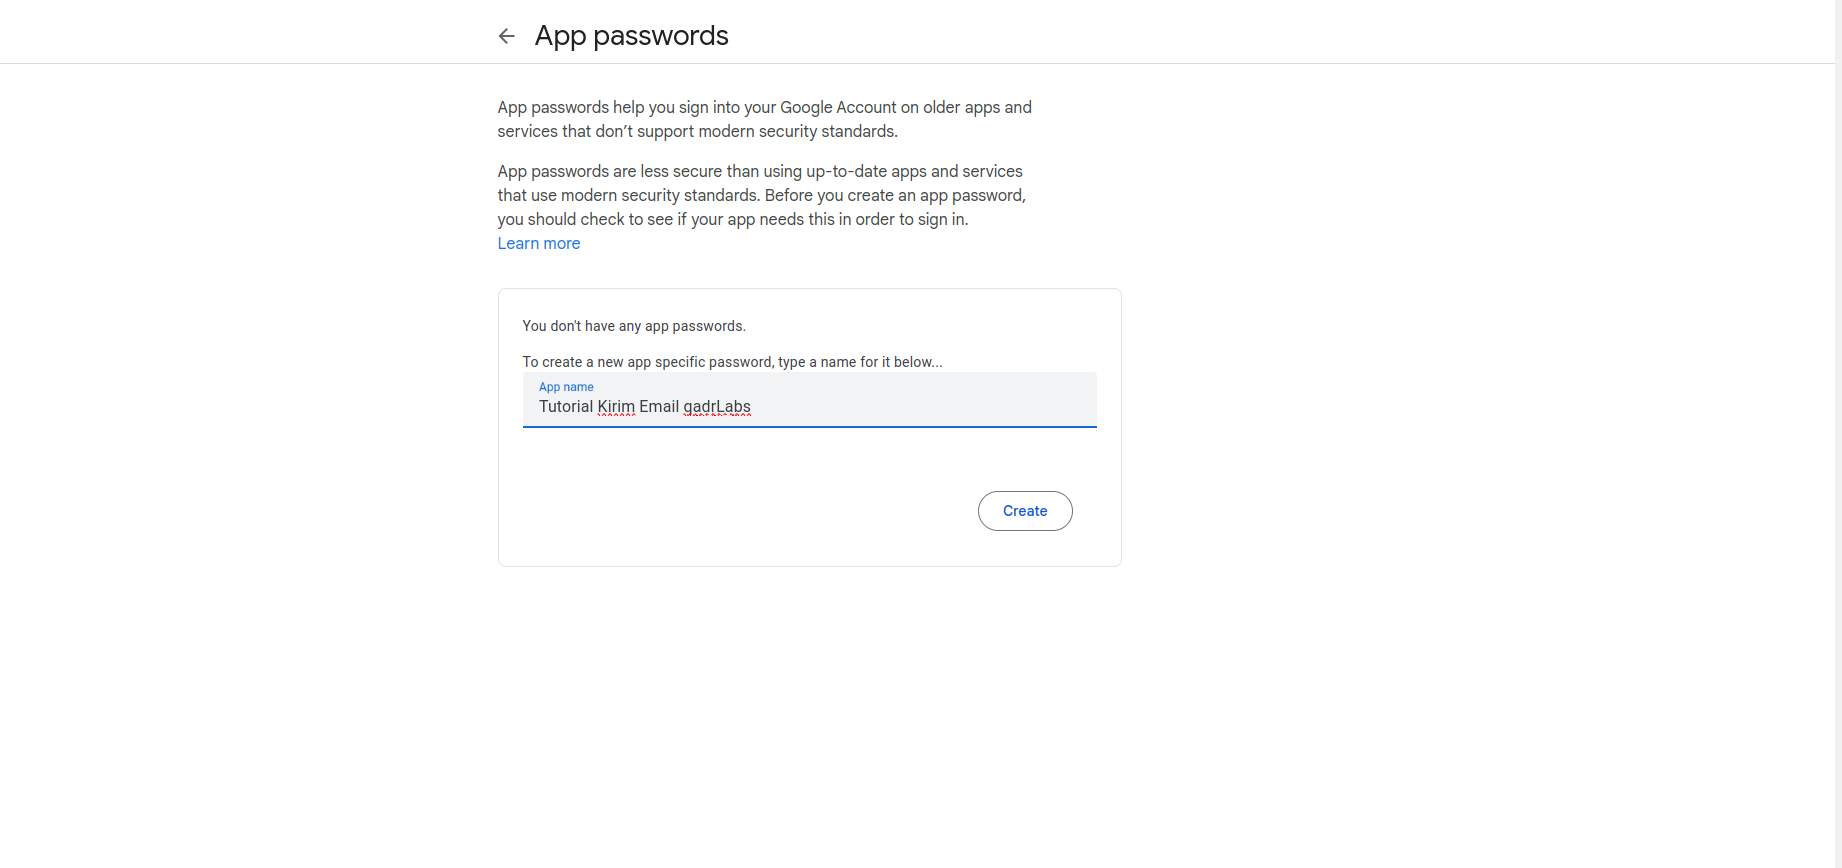 Buat app password baru